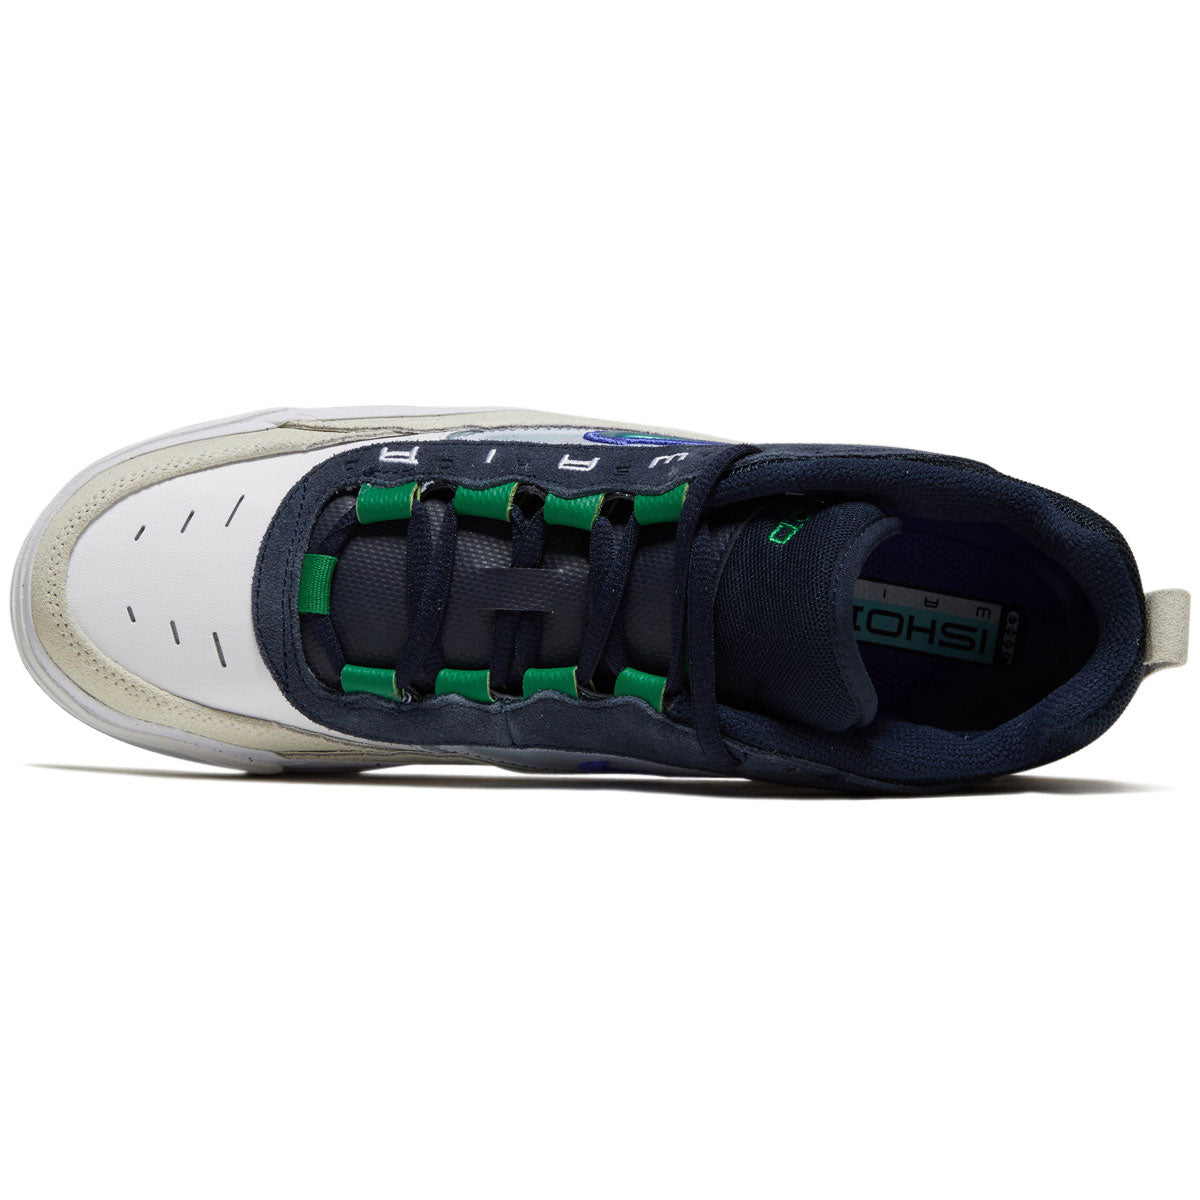 Nike SB Air Max Ishod Shoes - White/Persian Violet/Obsidian/Pine Green image 3